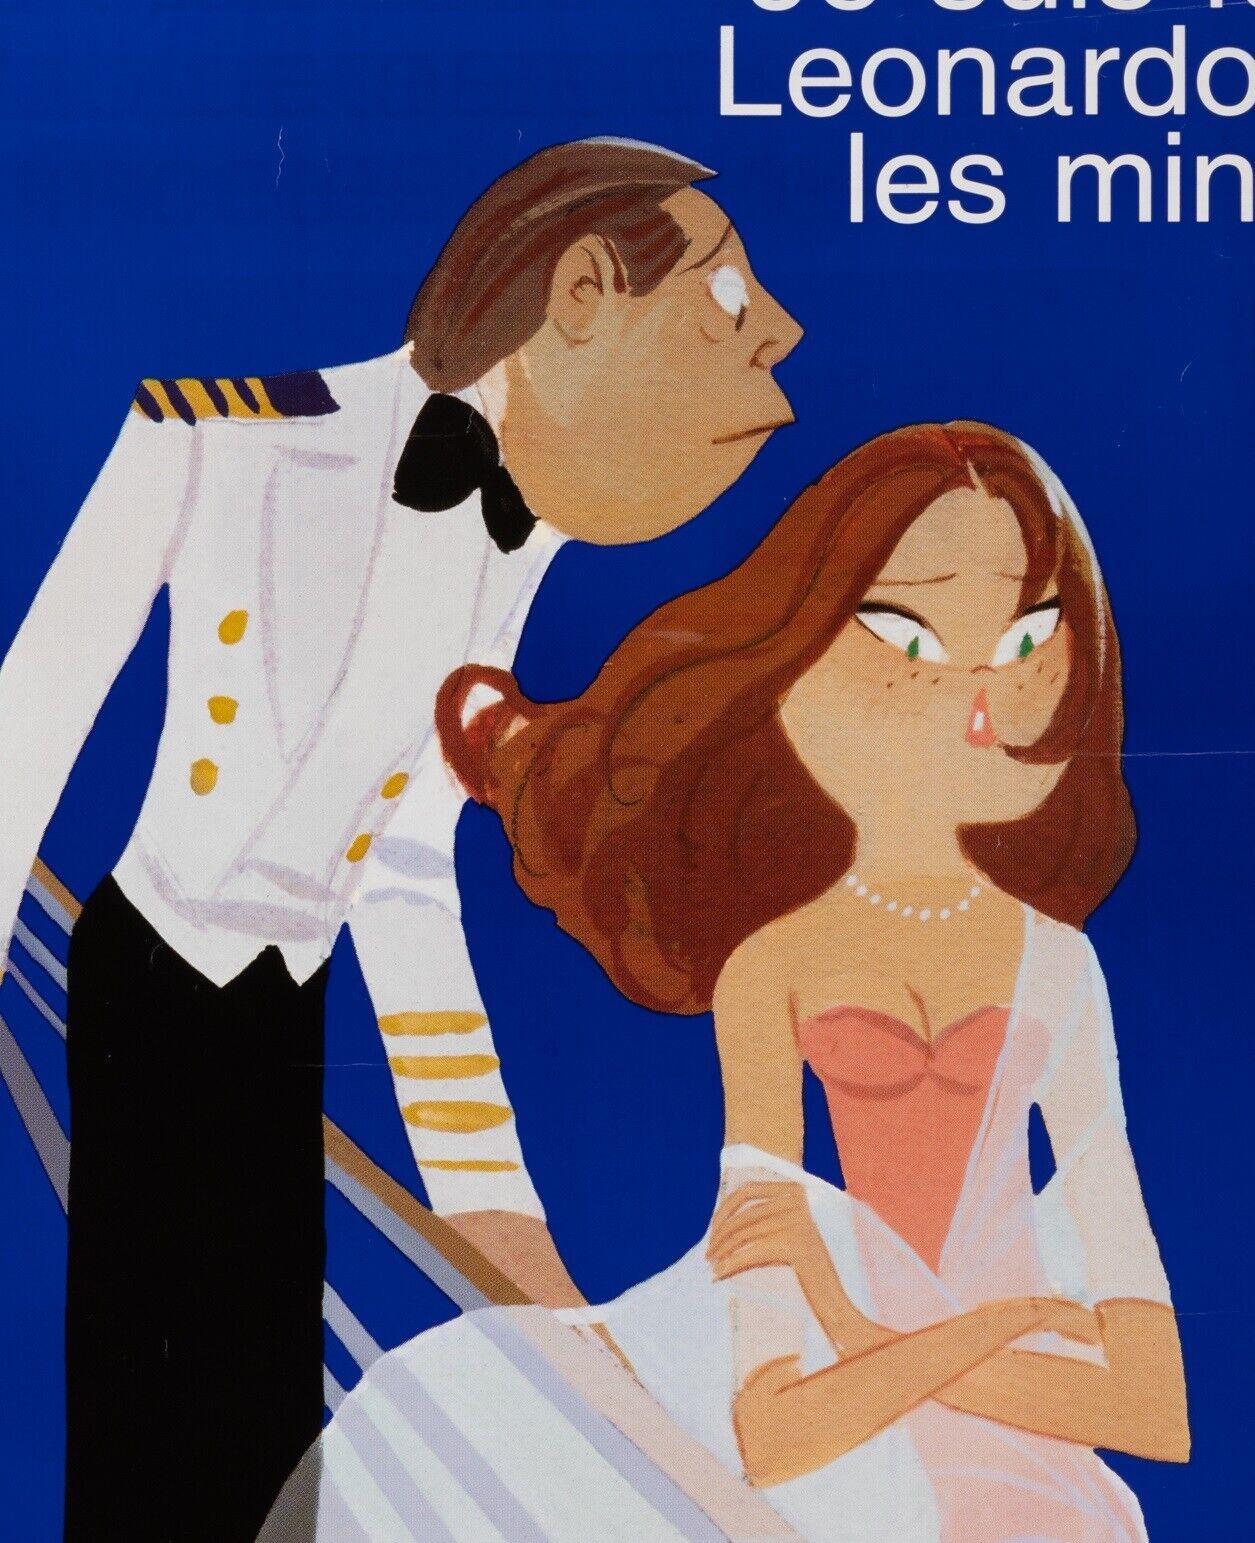 Original Poster-Edmond Kiraz-Canderel-Léonardo-Parisiennes, C.1990 In Good Condition In SAINT-OUEN-SUR-SEINE, FR